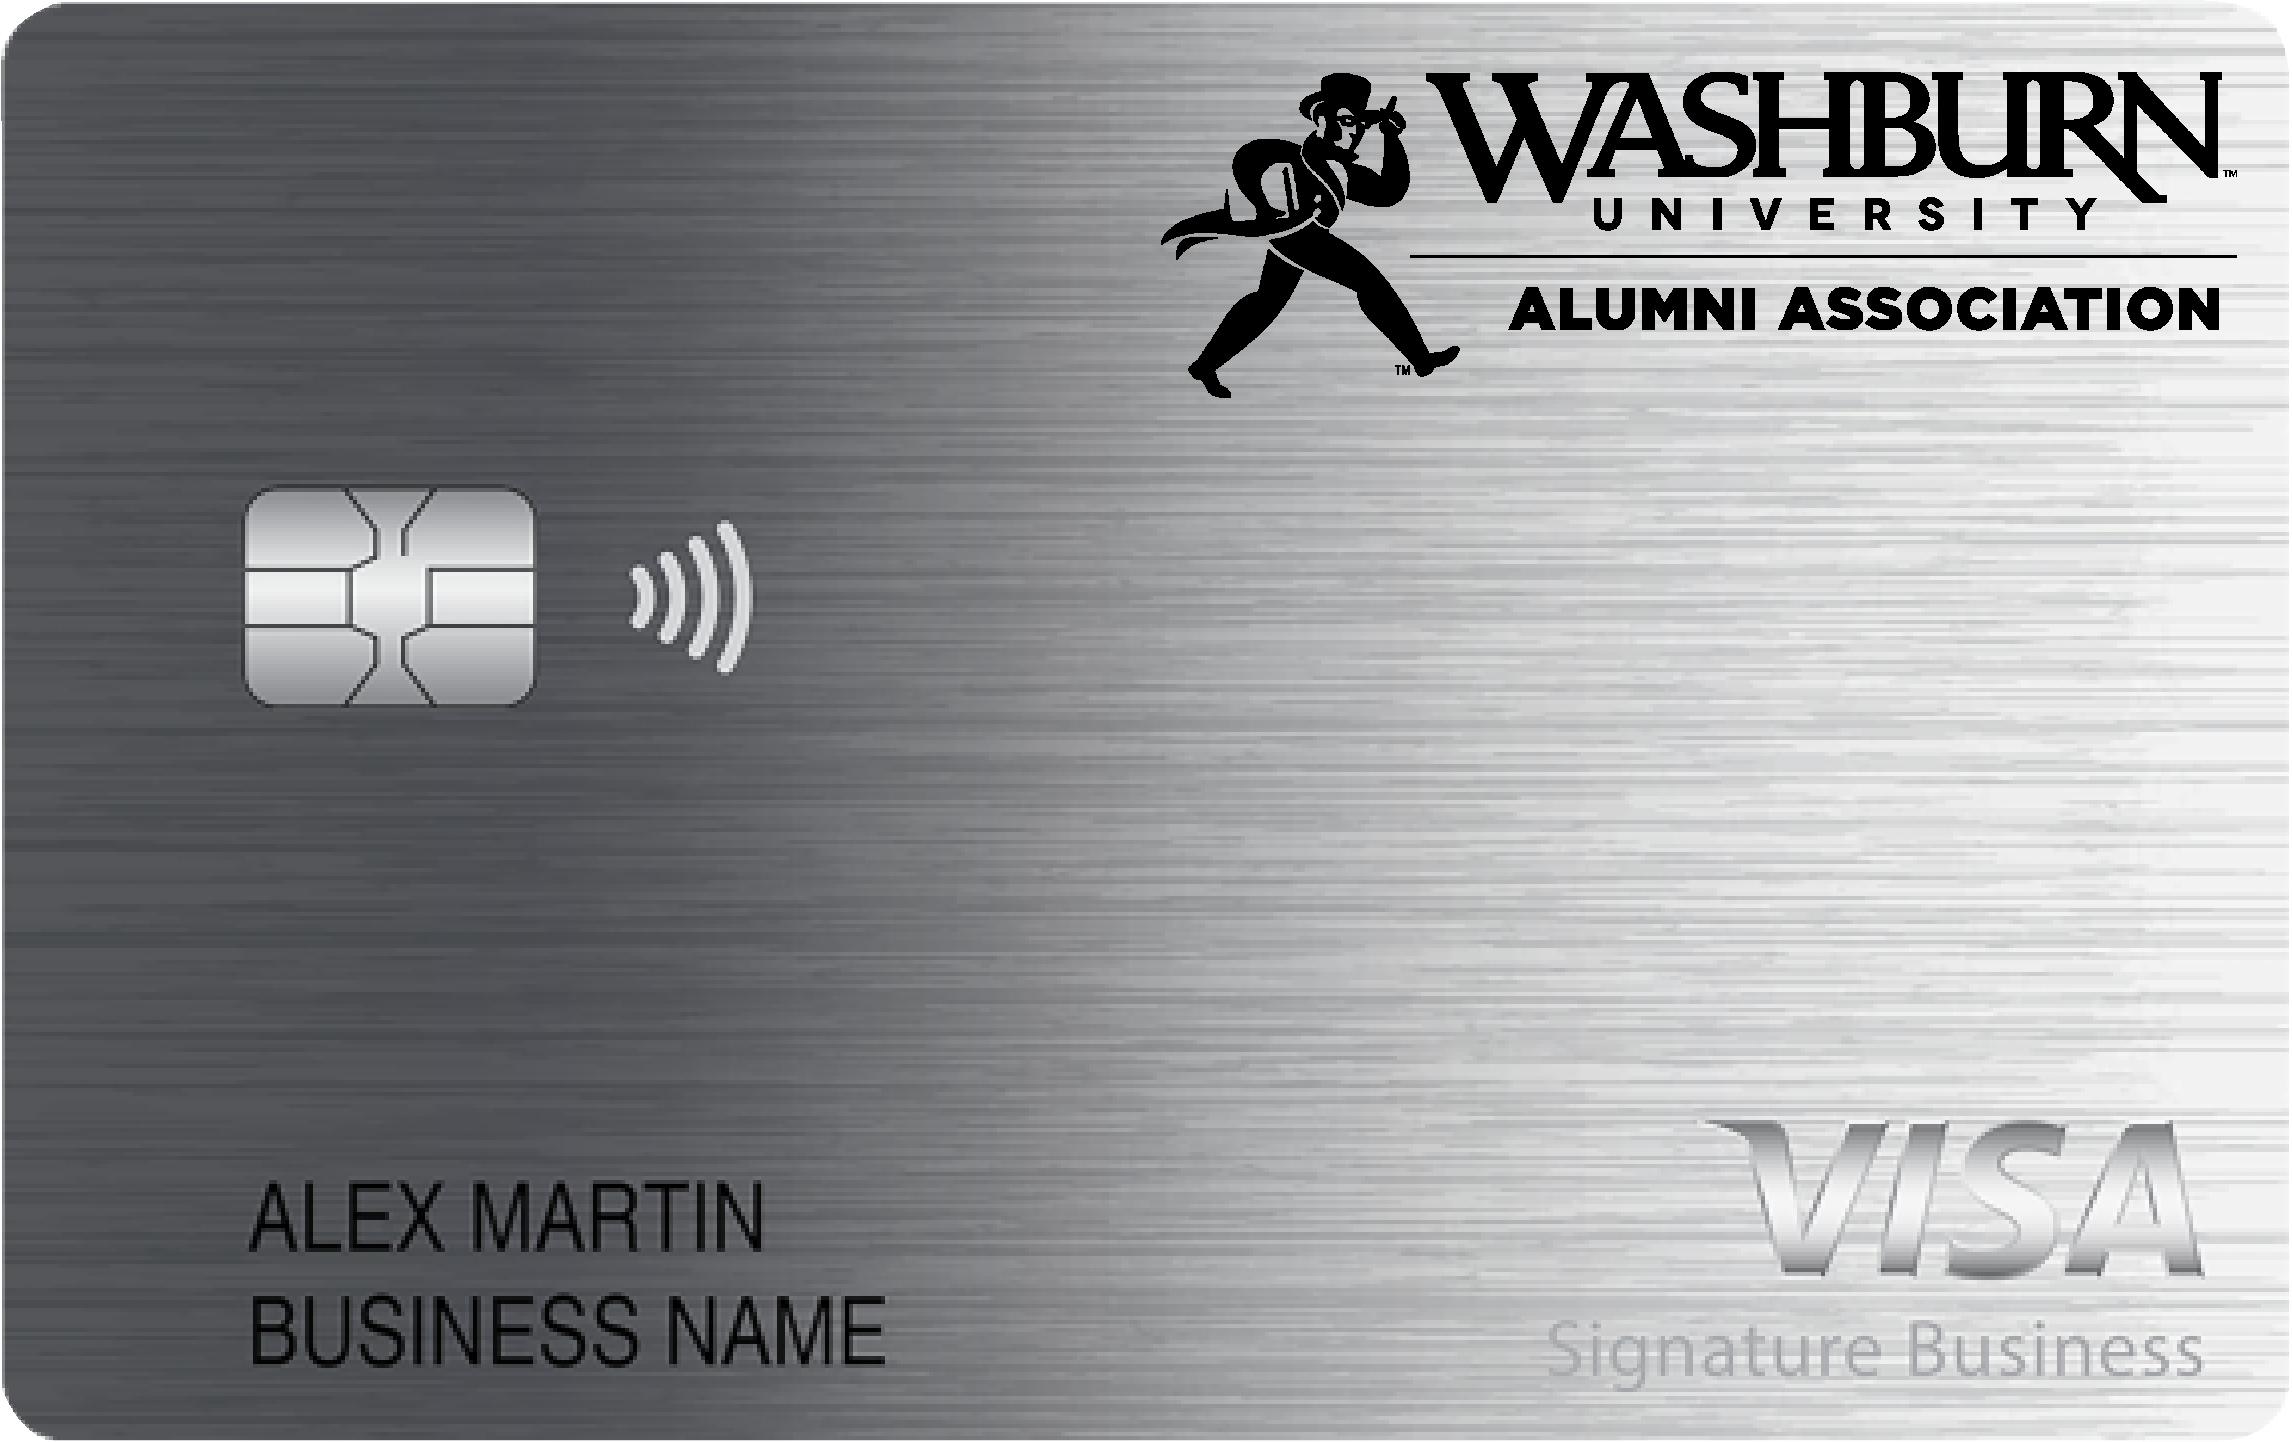 INTRUST Bank Washburn University Smart Business Rewards Card